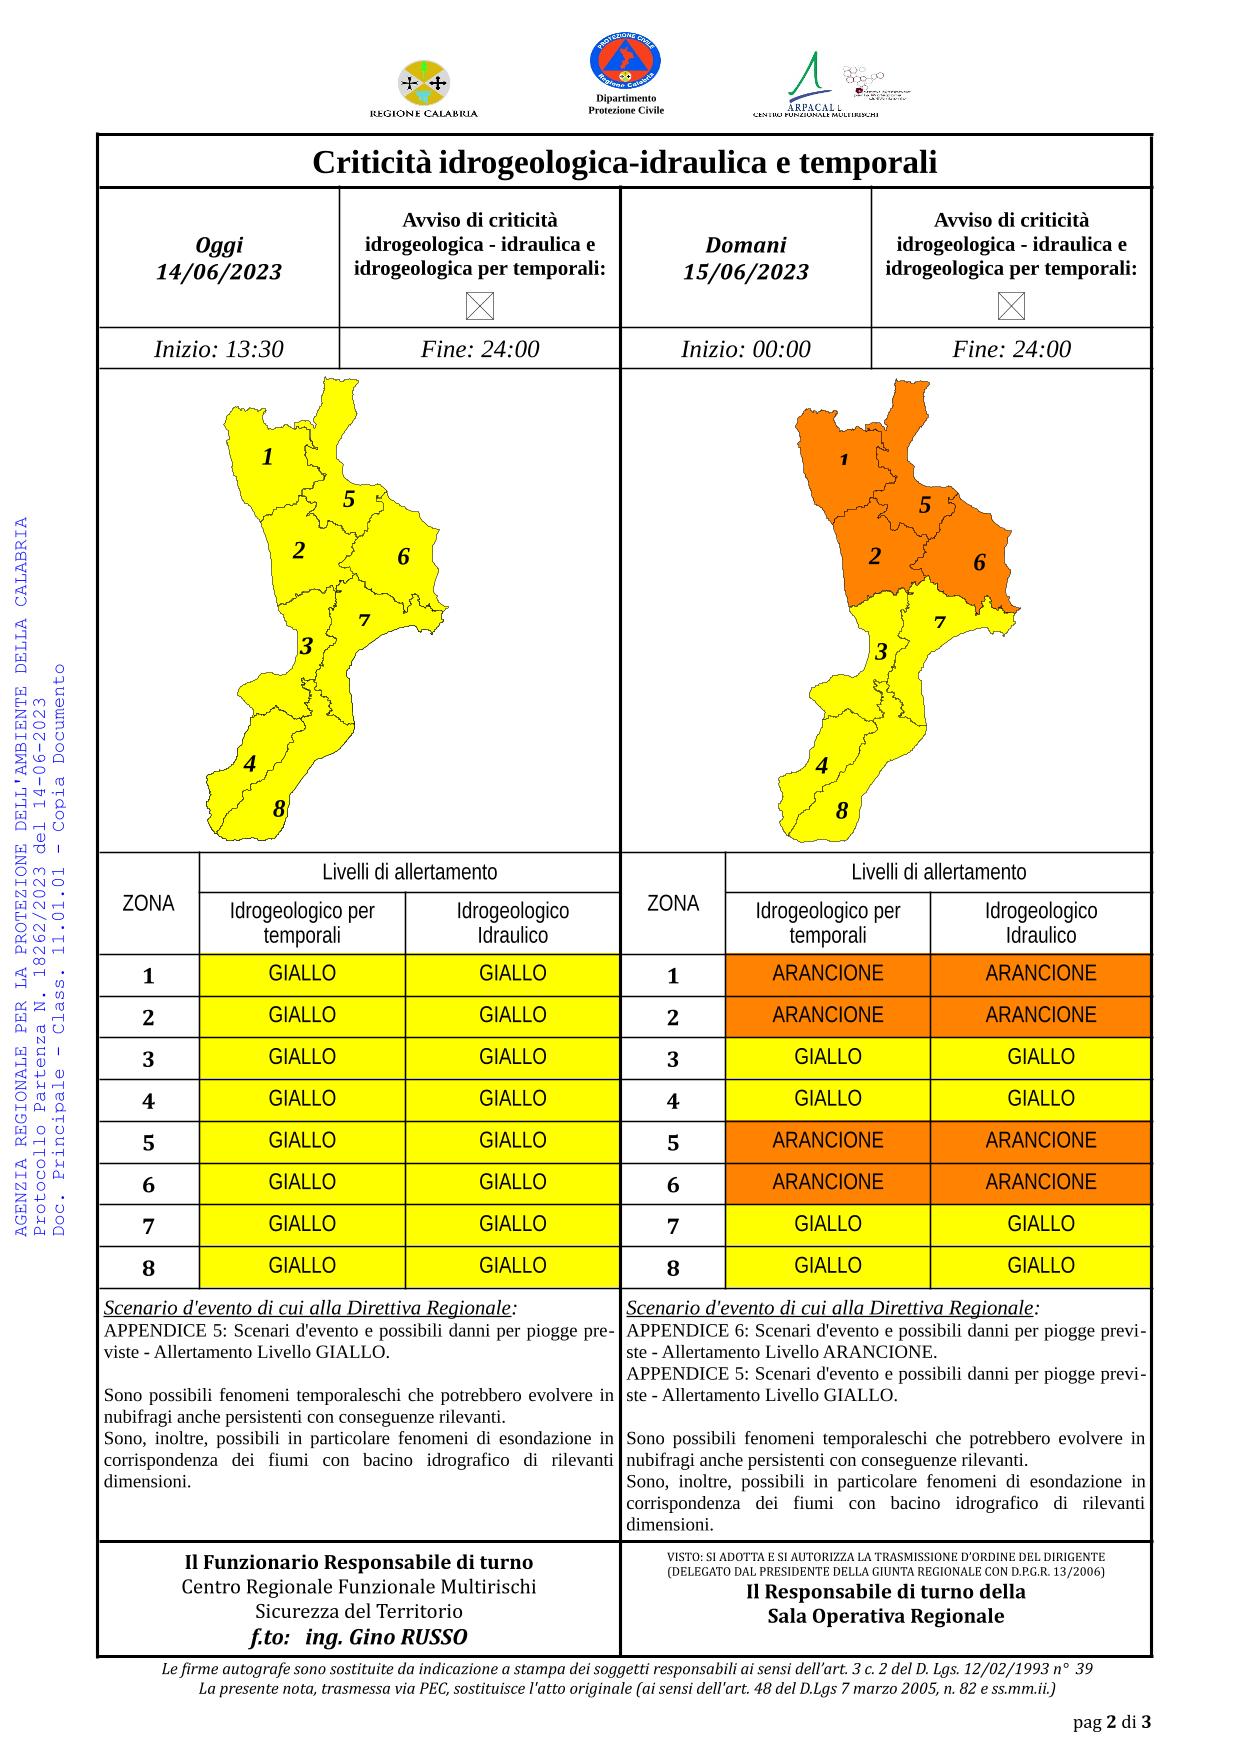 Criticità idrogeologica-idraulica e temporali in Calabria 14-06-2023